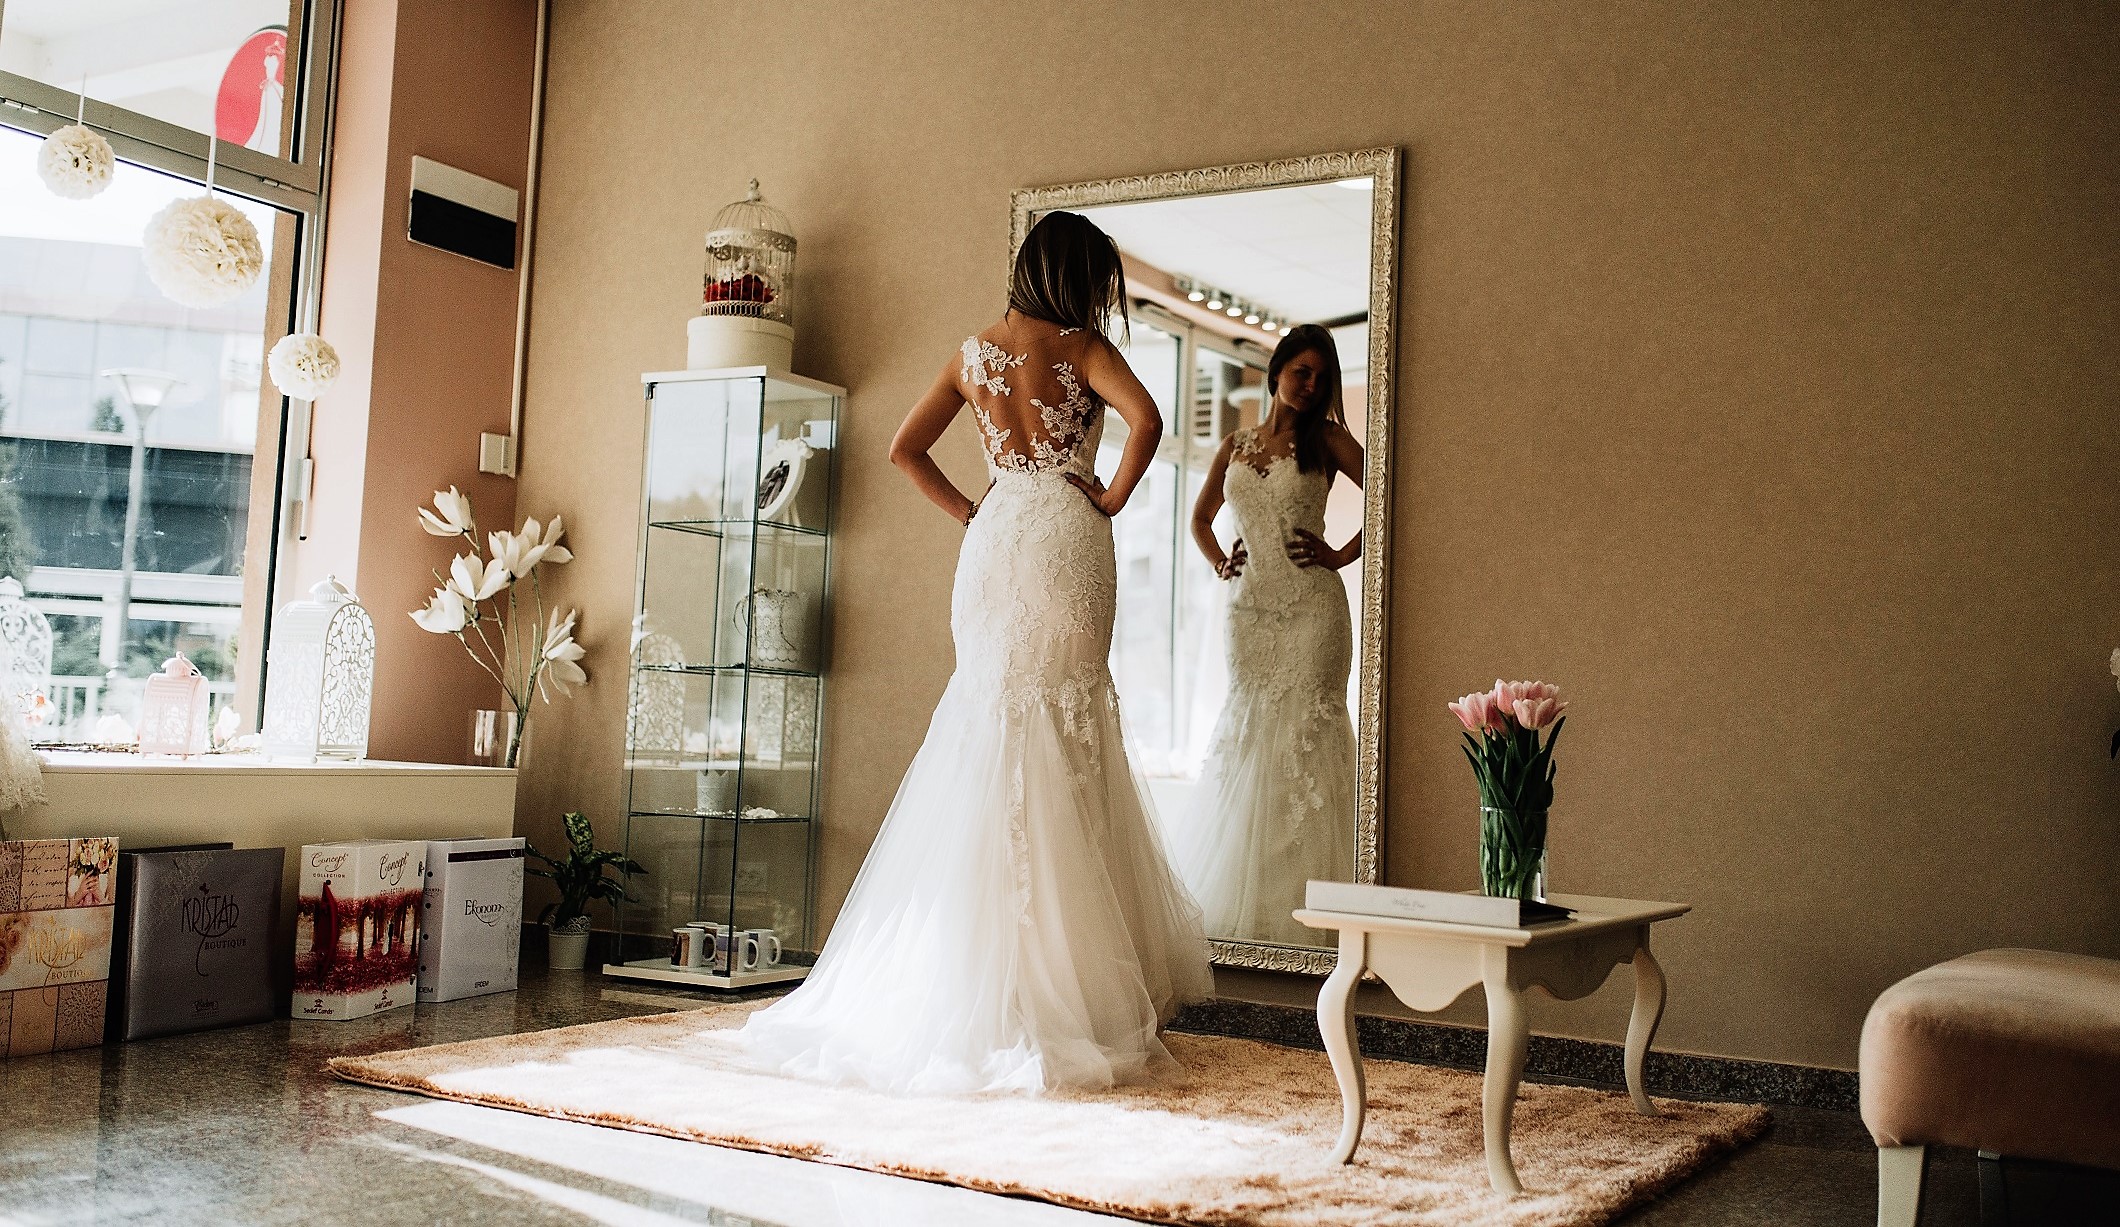 Salon vjencanica lovely bride